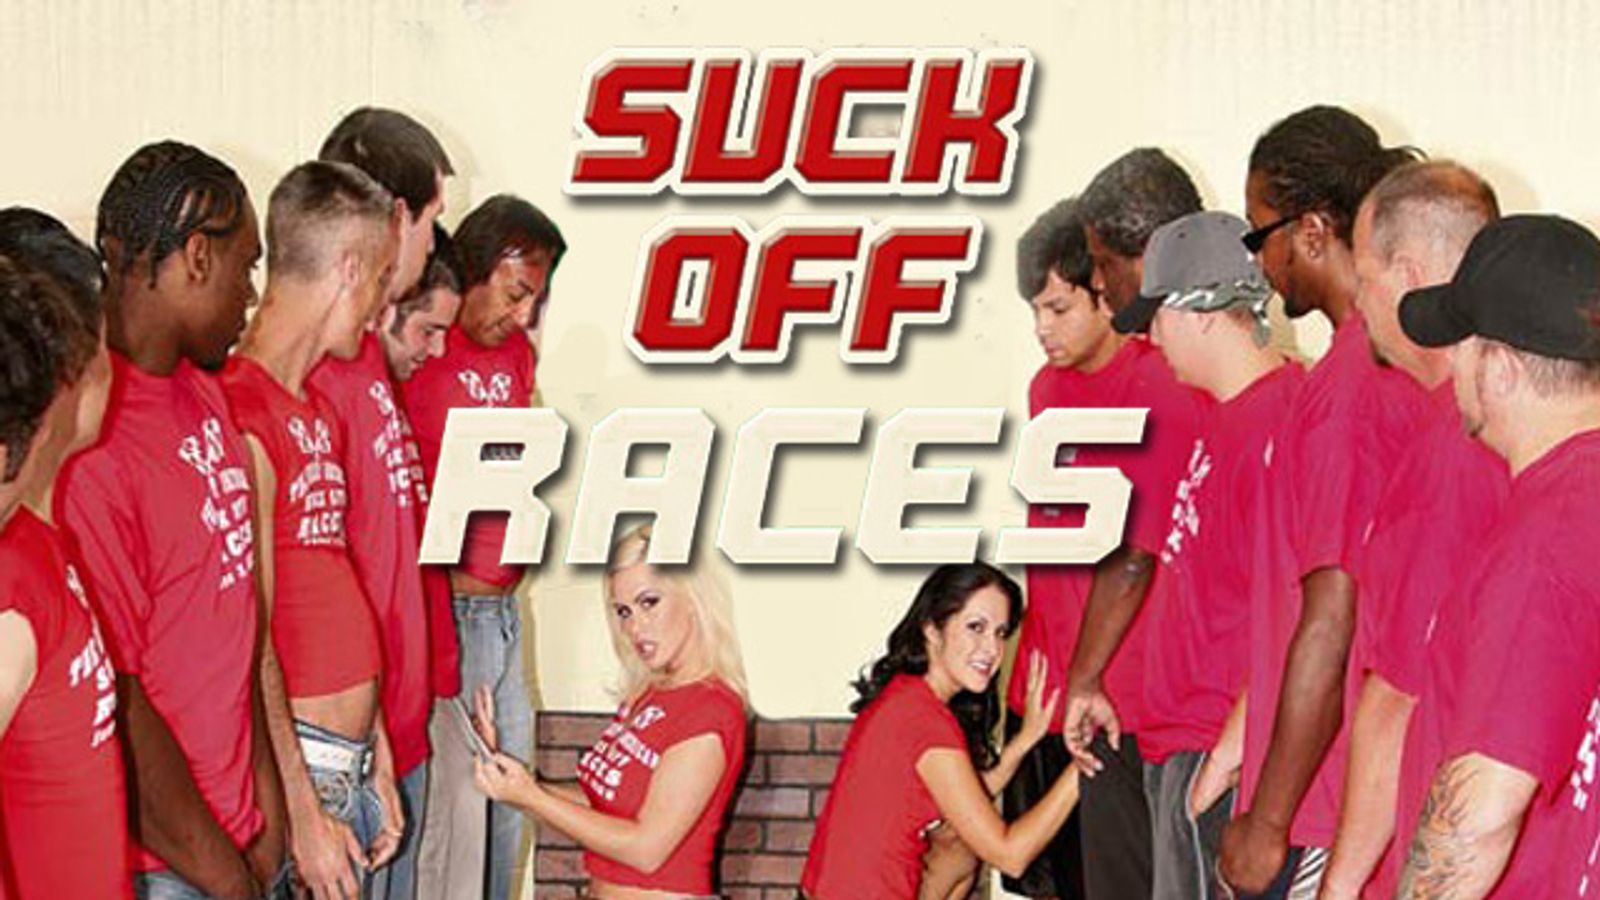 Suckoff races